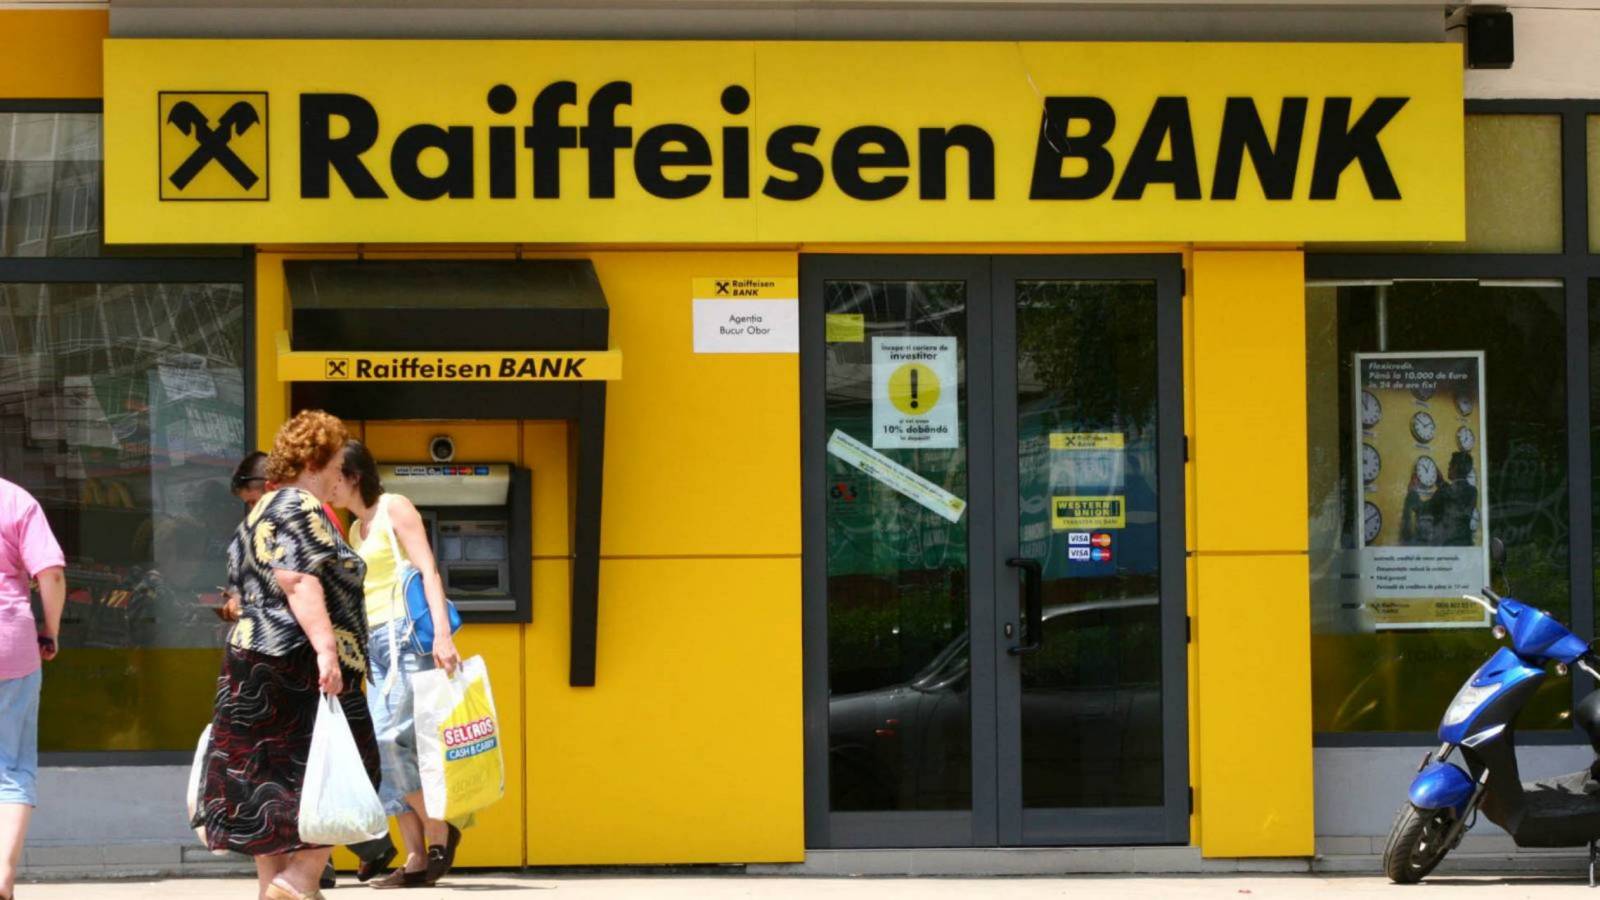 Raiffeisen Bank codes